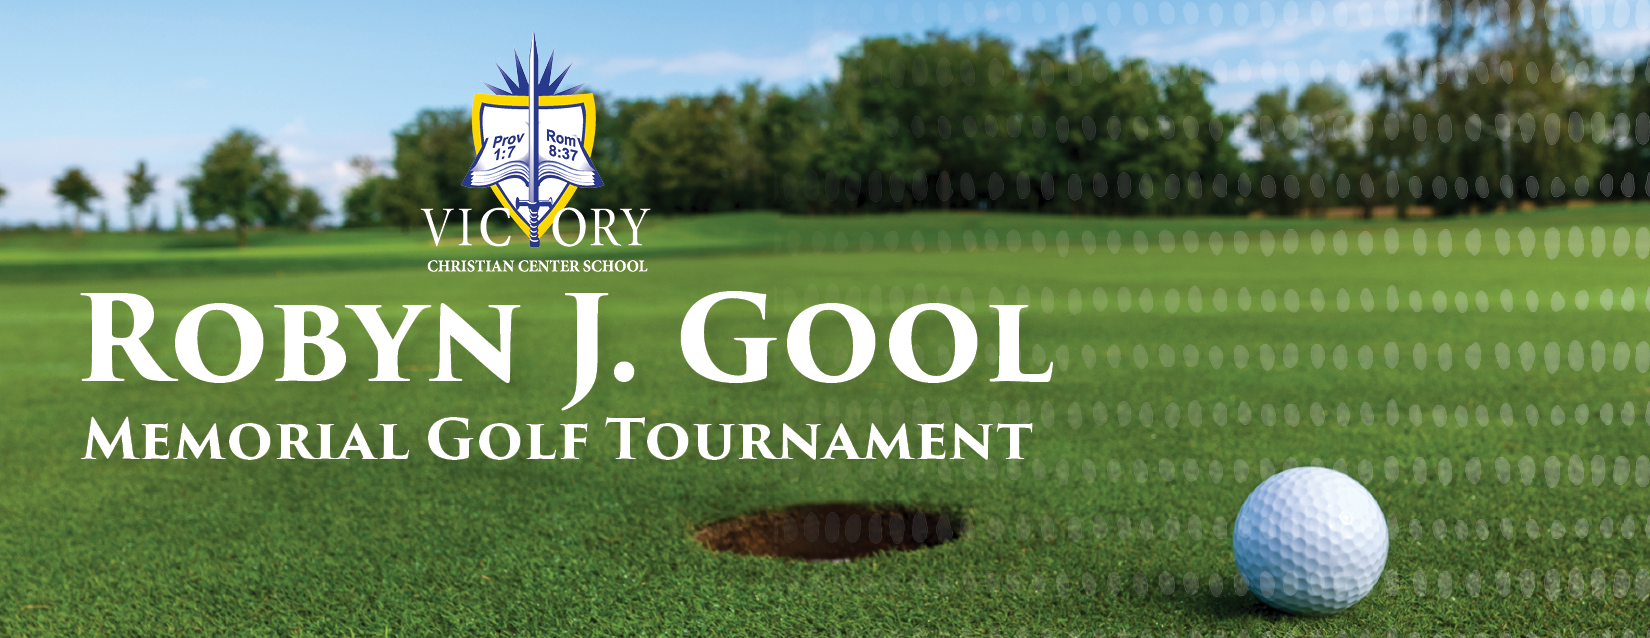 Robyn J. Gool Memorial Golf Tournament